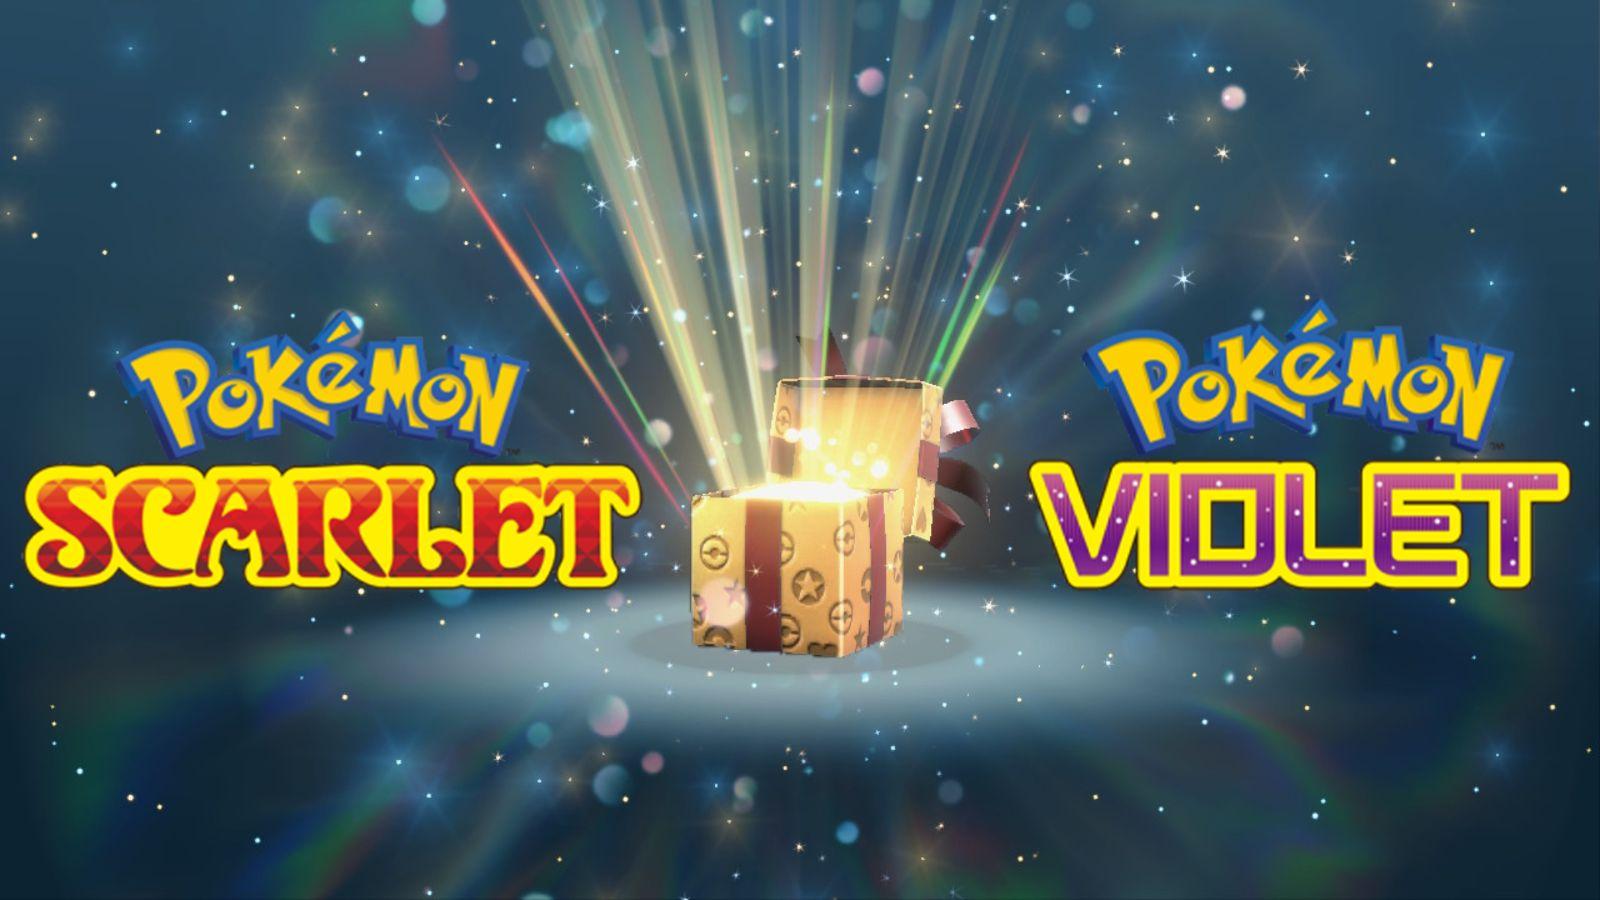 Pokemon Scarlet & Violet Mystery Gift codes: Free rewards in